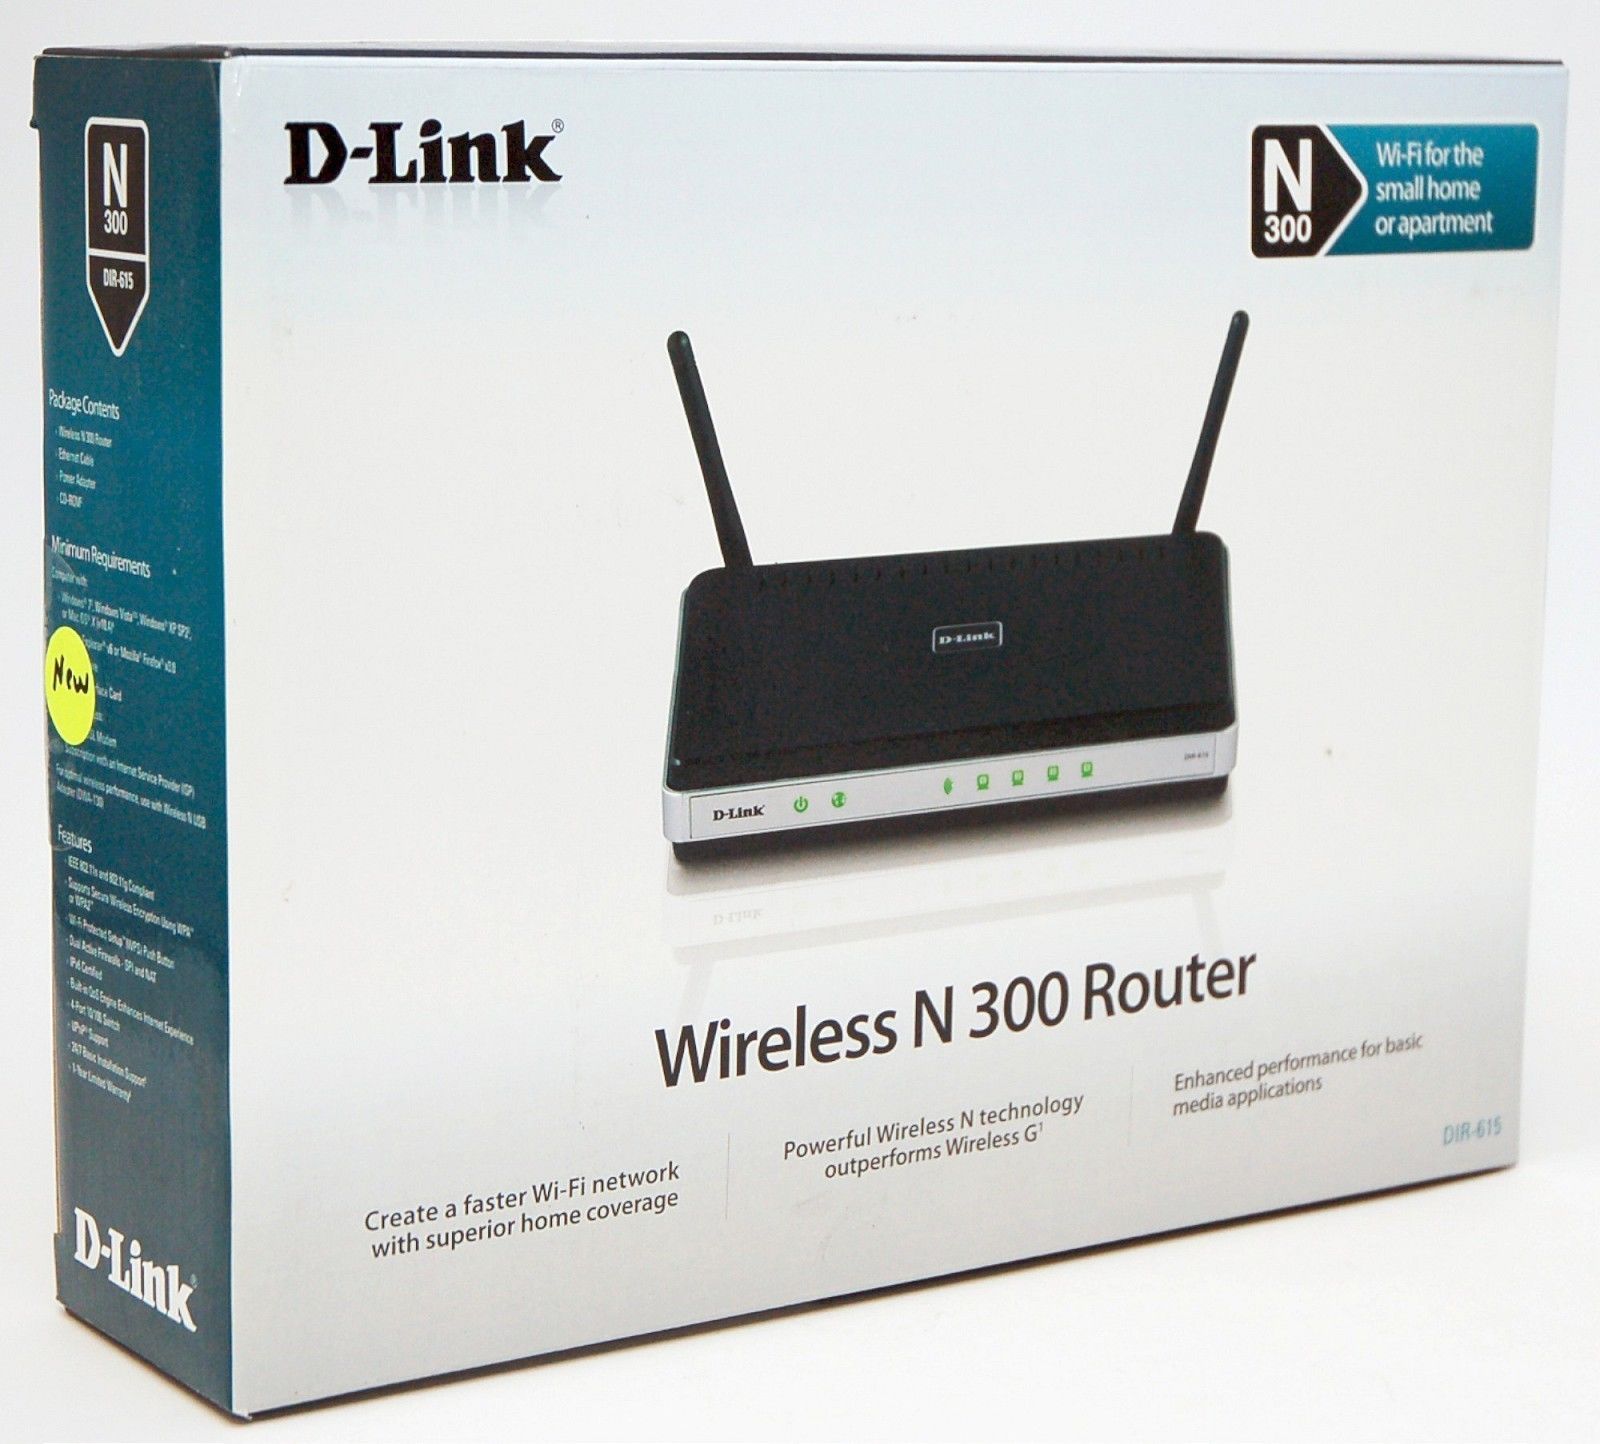 D-LINK N 300 Router (DIR-615) Buy best laptops desktop at